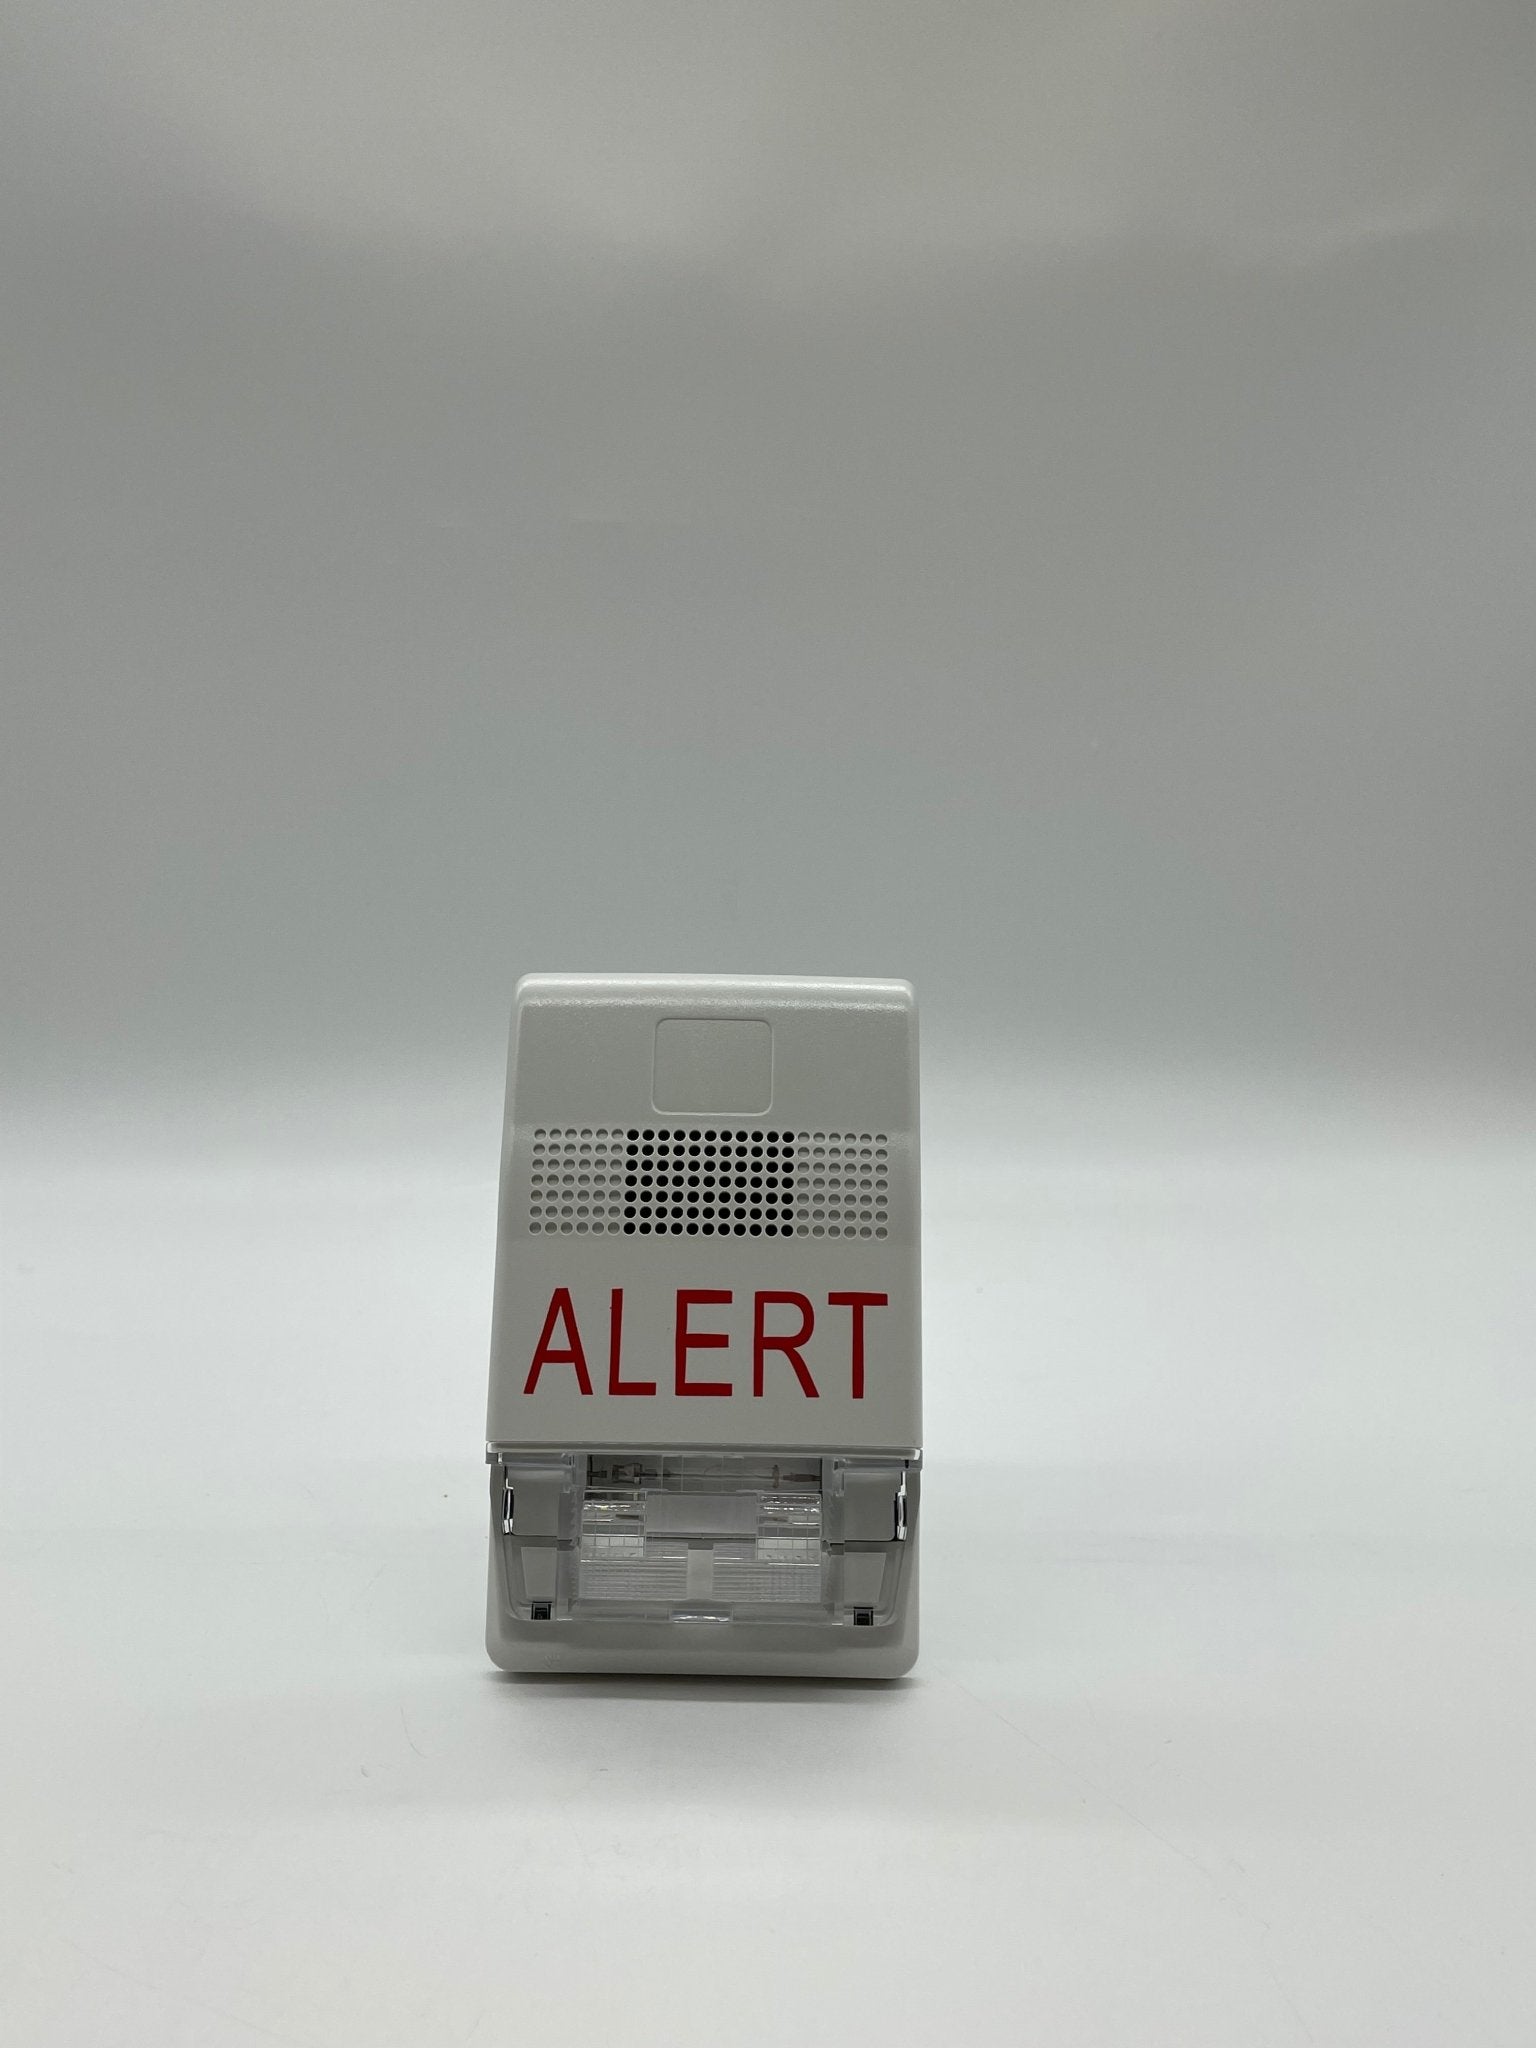 Edwards G1WA-VMC - The Fire Alarm Supplier